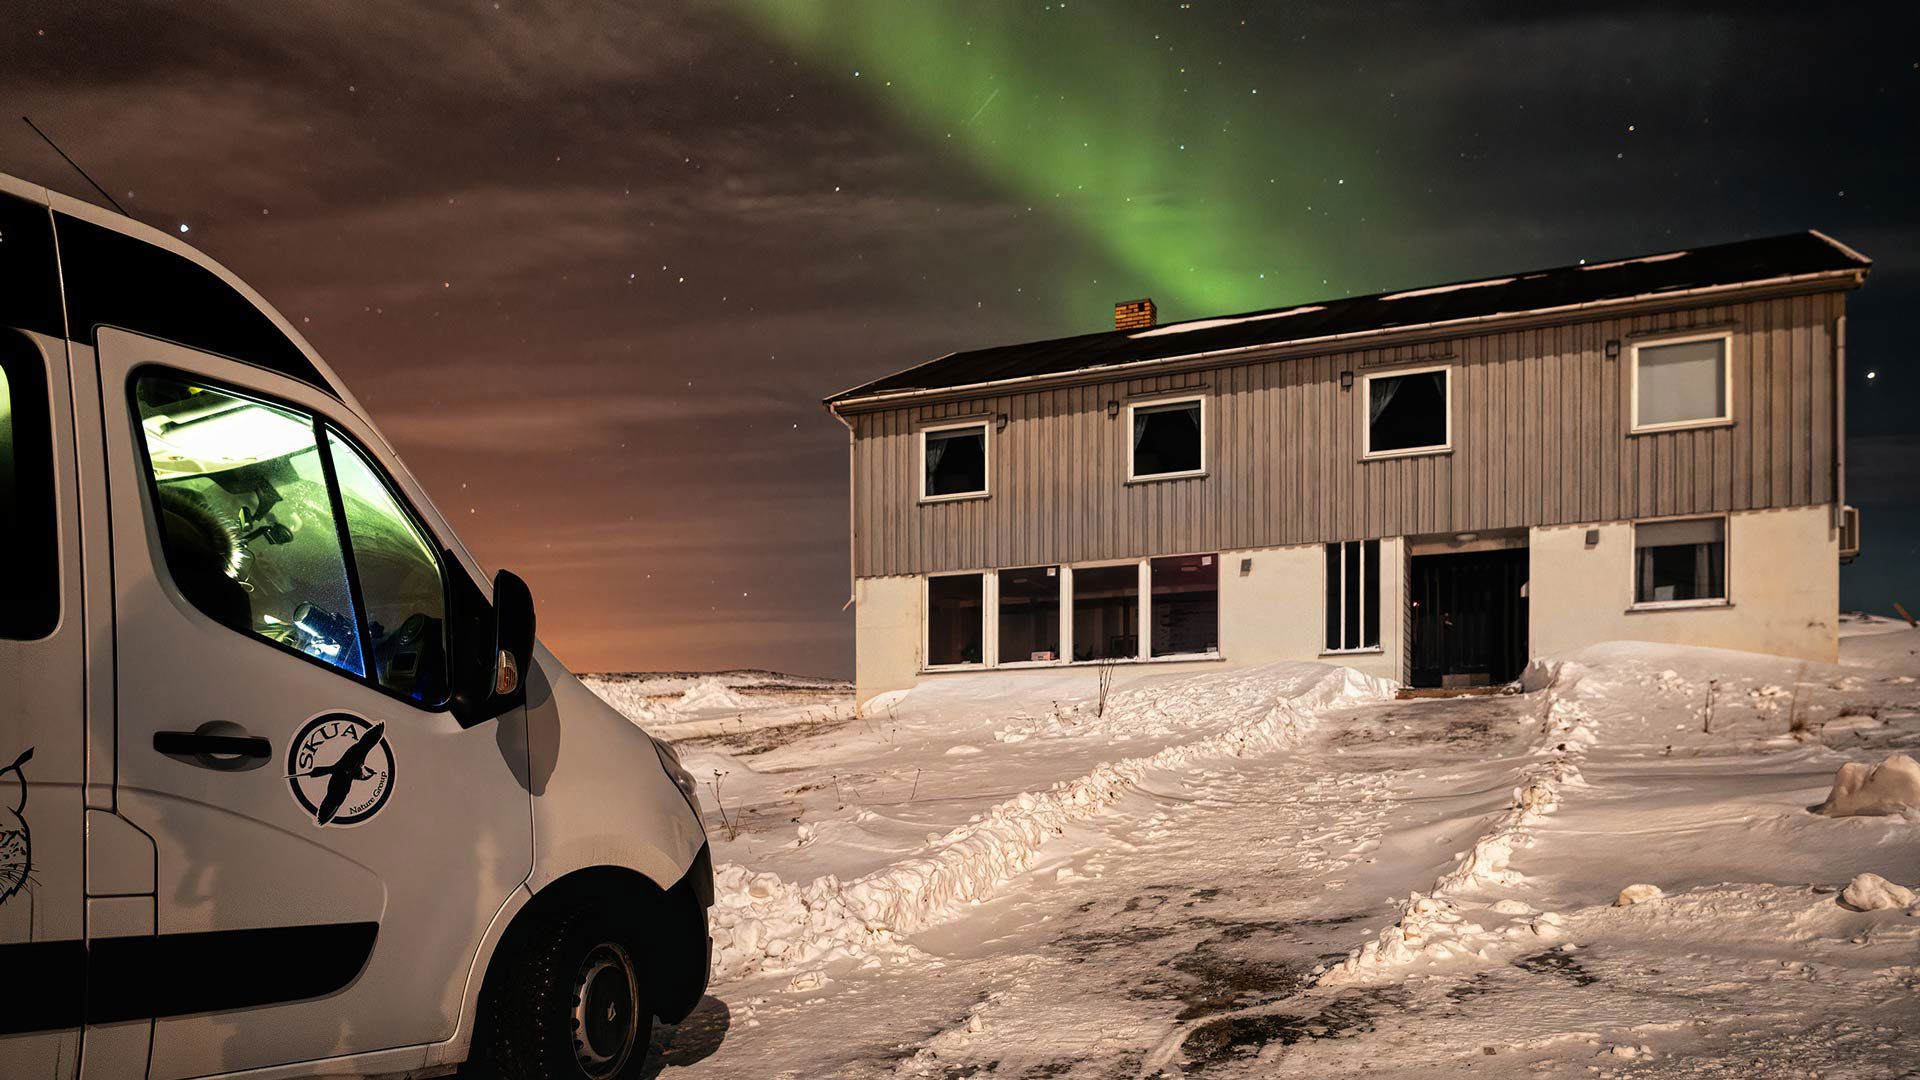 Kongsfjord Artic Lodge - Company Data 2